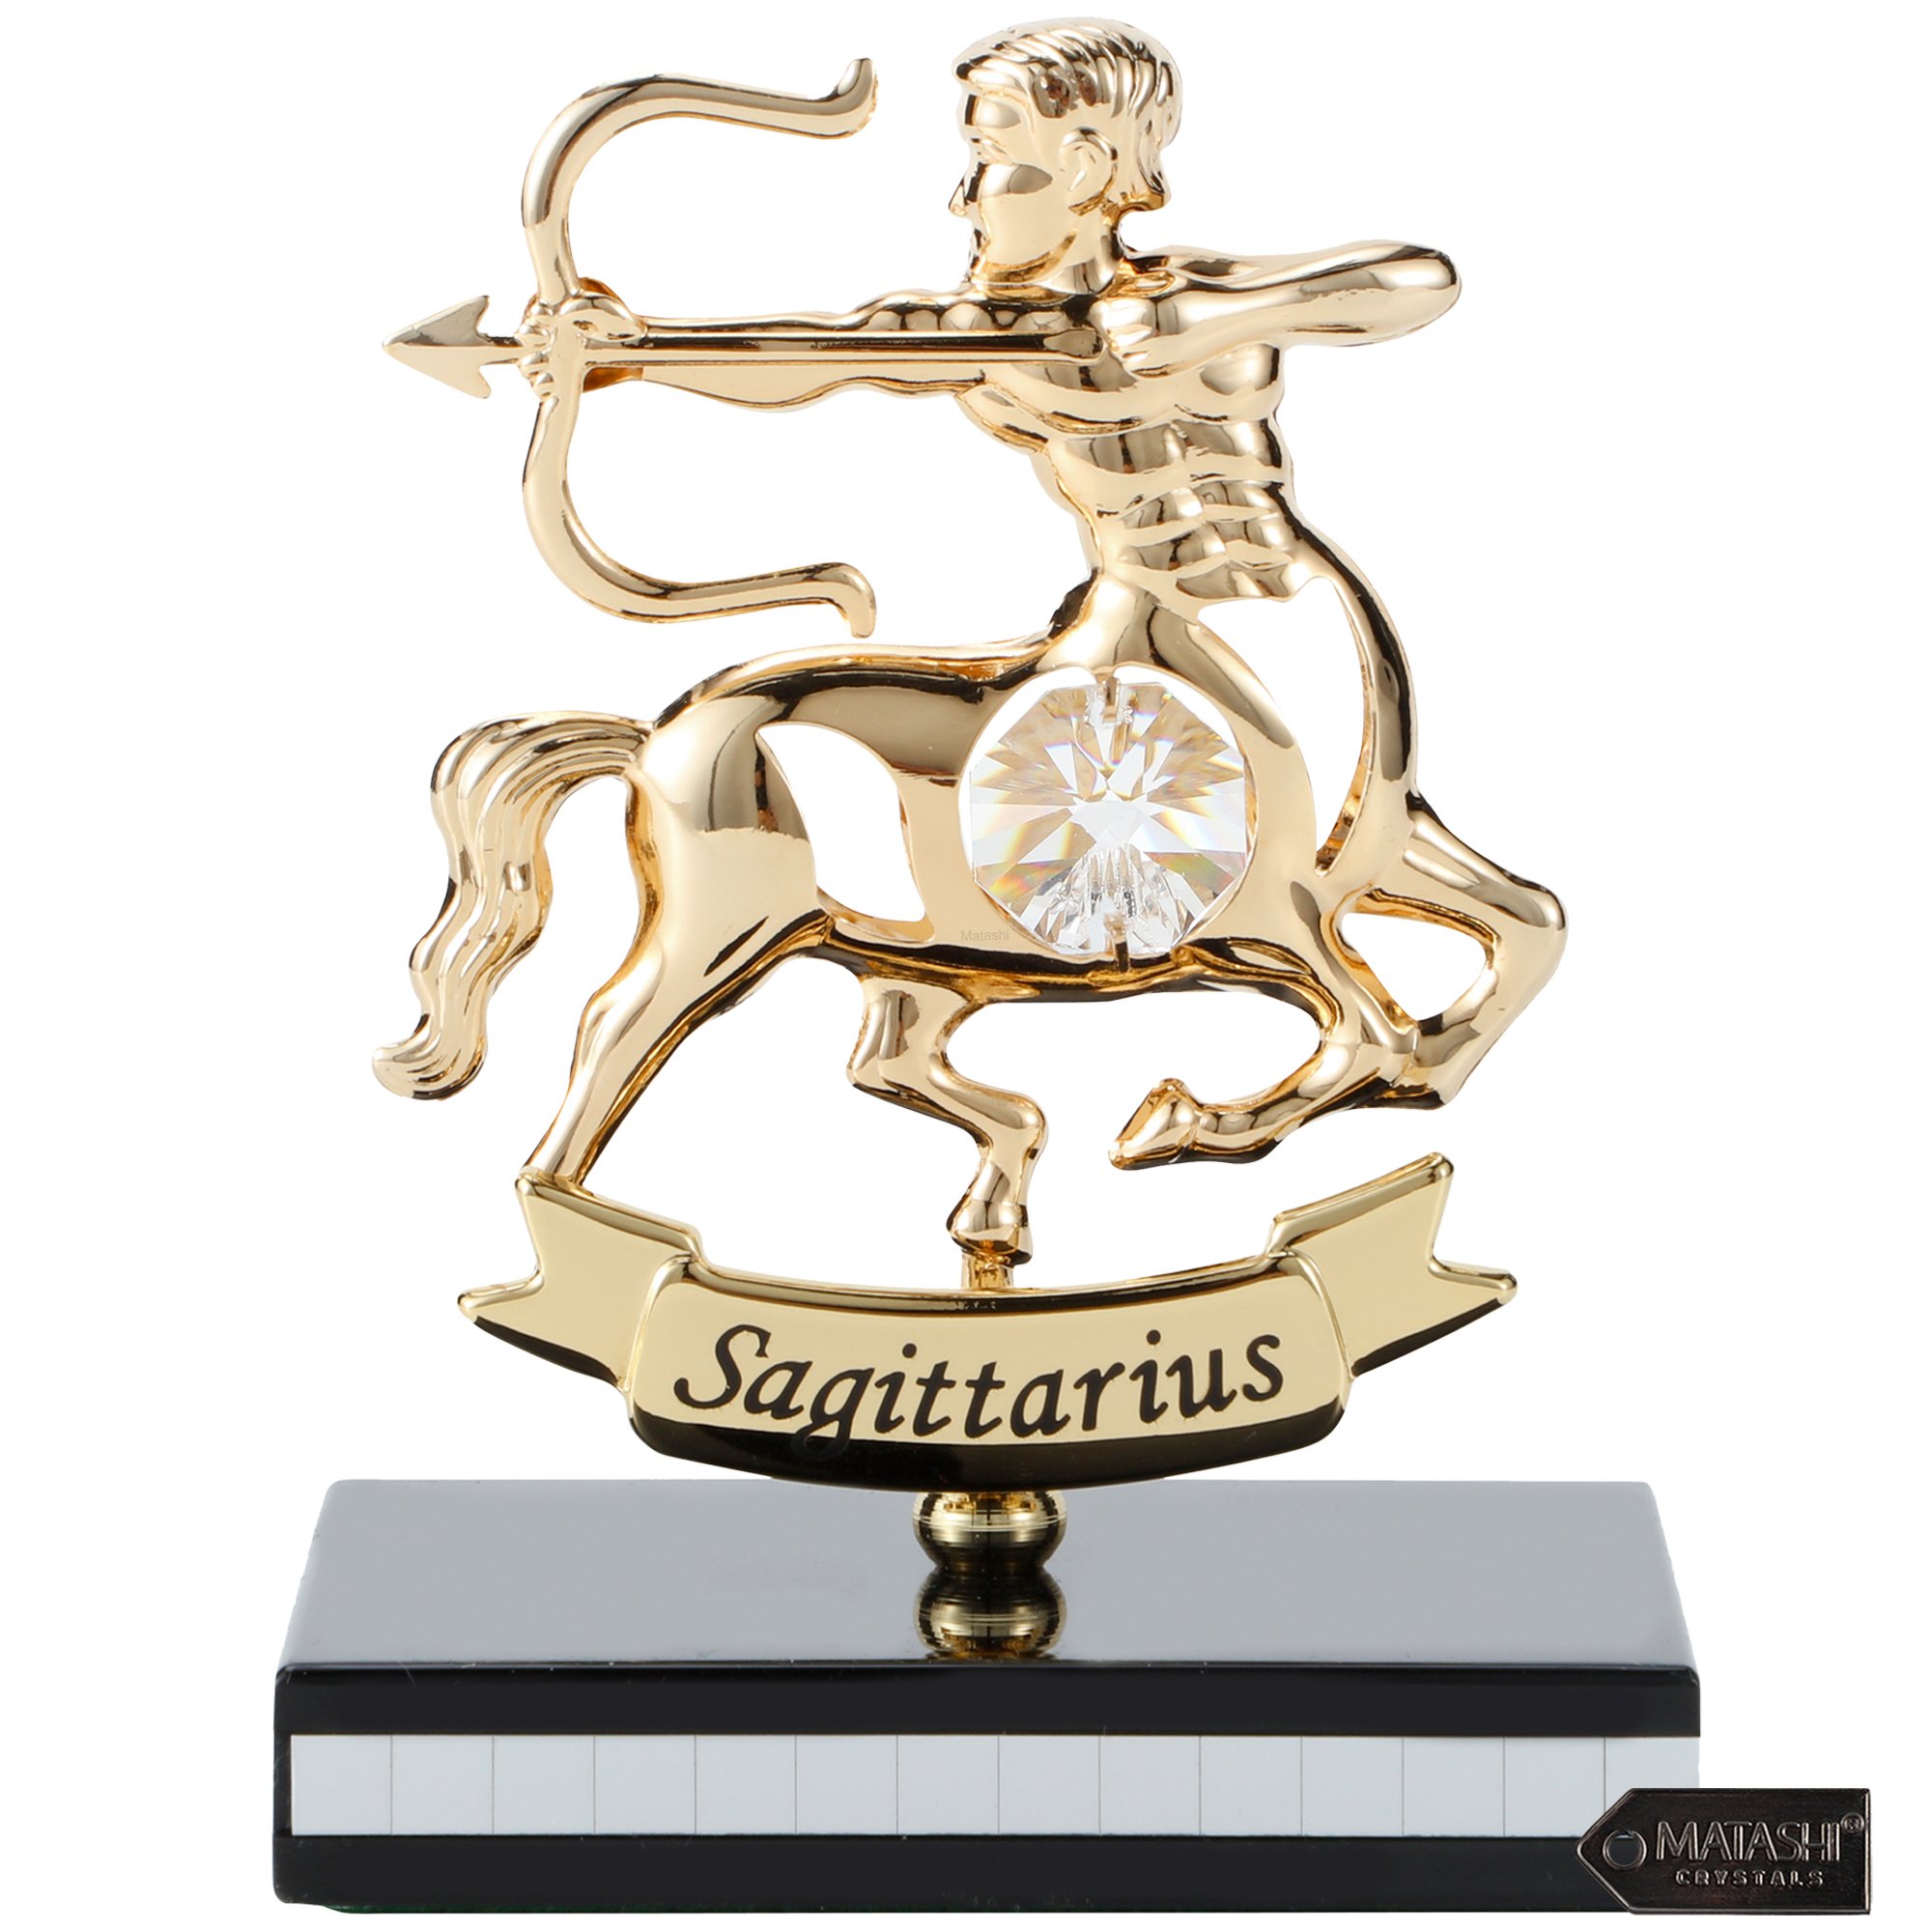 Matashi 24K Gold Plated Zodiac Astrological Sign Sagittarius Figurine Statuette On Stand Studded With Matashi Crystals